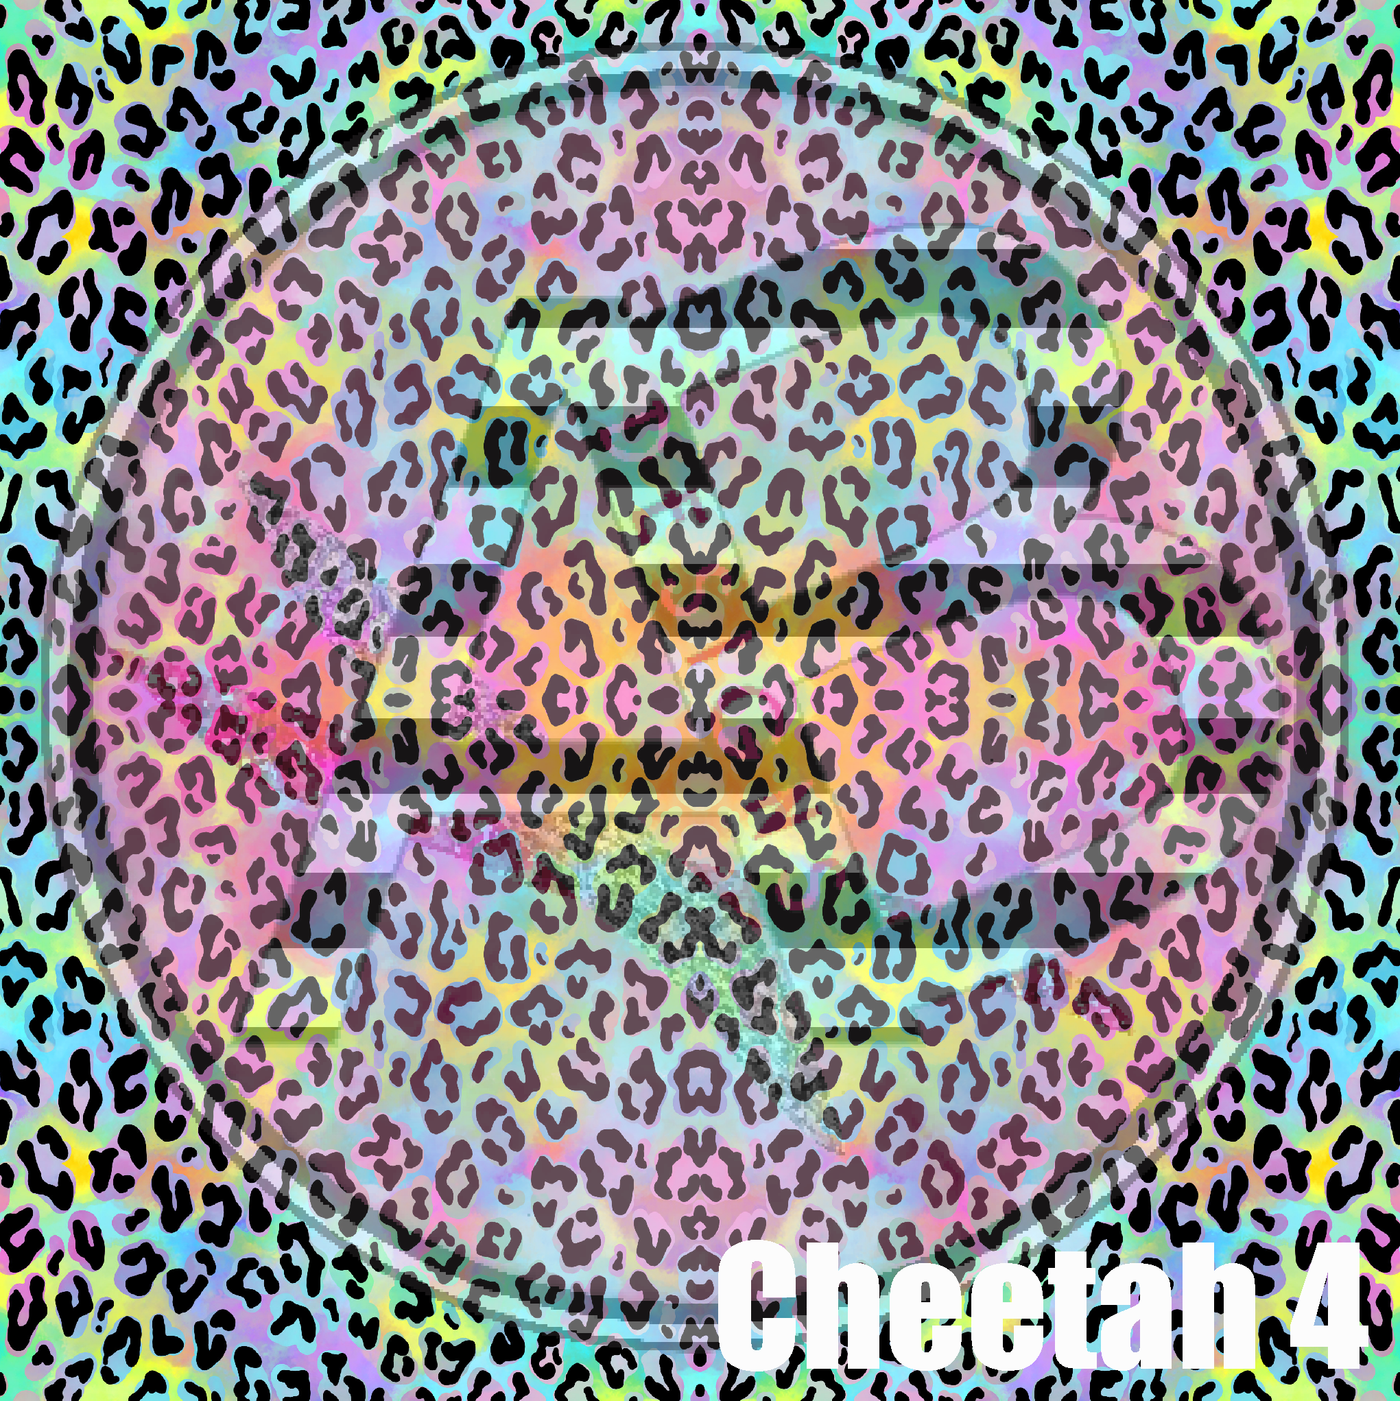 Adhesive Patterned Vinyl - Cheetah 4